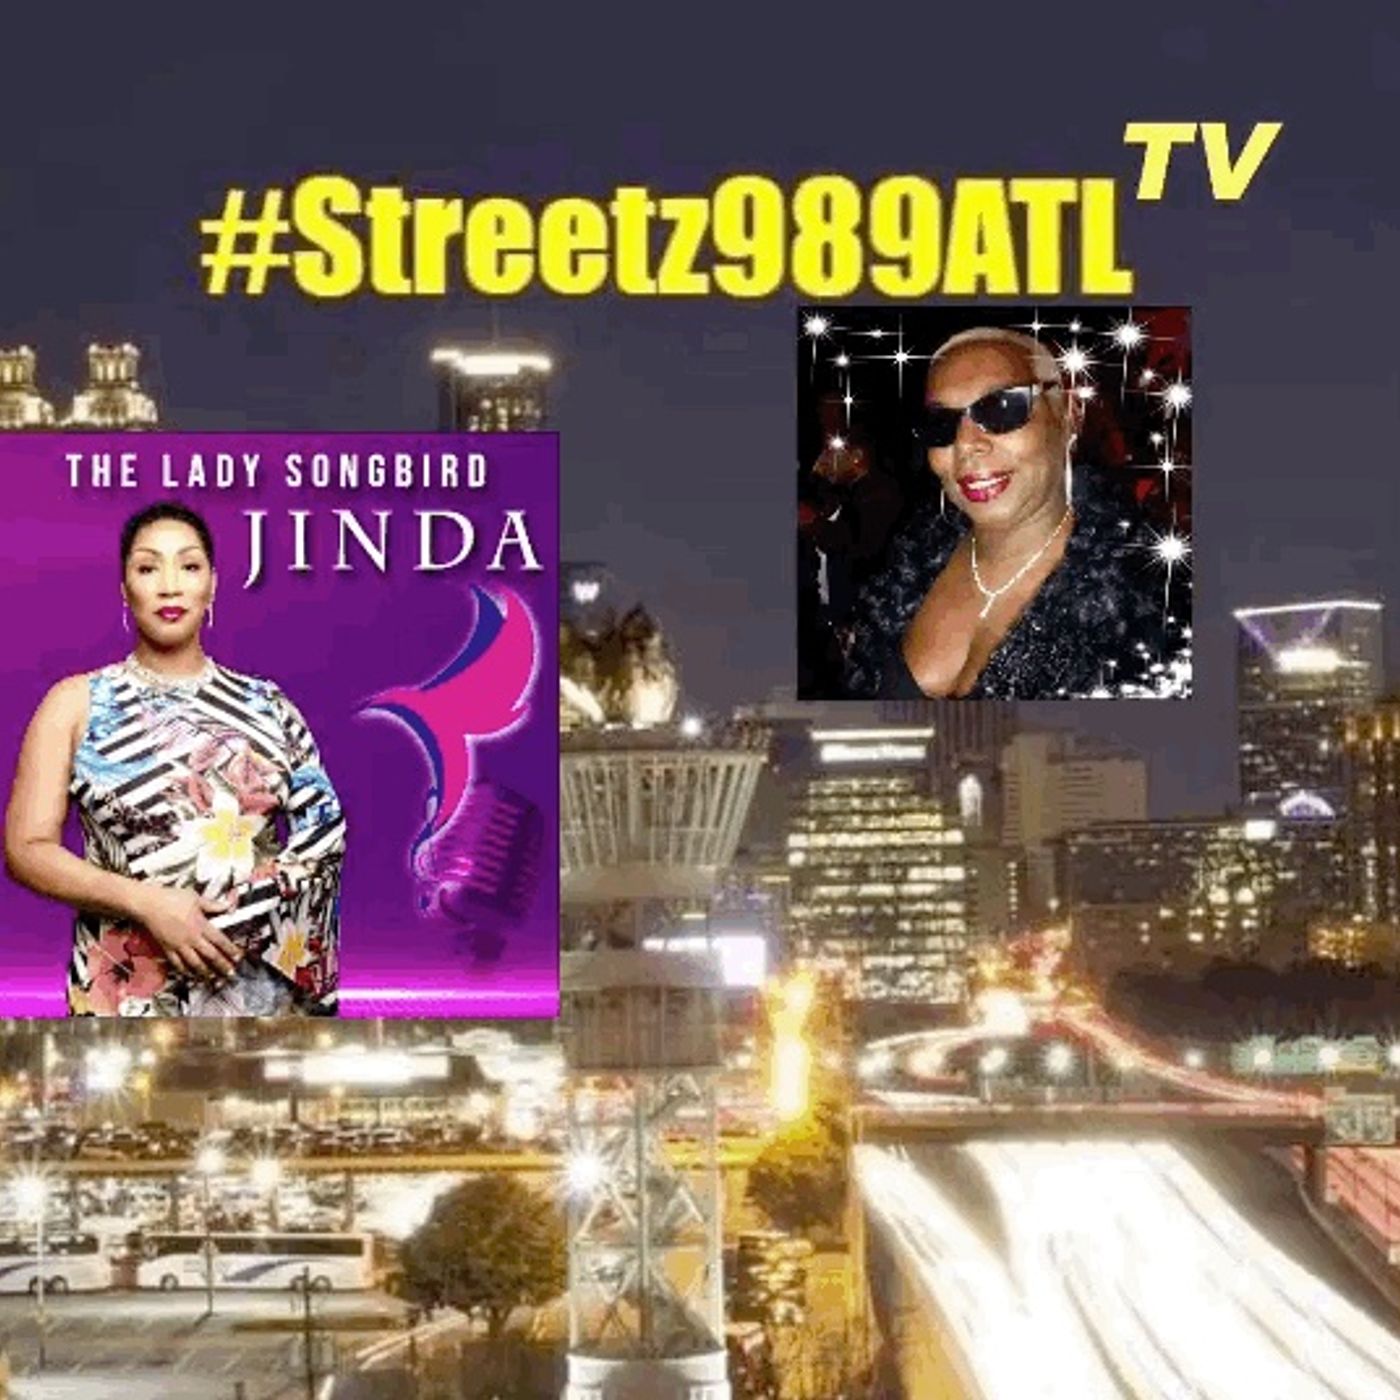 Atlanta' Jazz - Soul & Bluez on Streetz989ATLTV with EmCee' Jazz & Jinda Harris